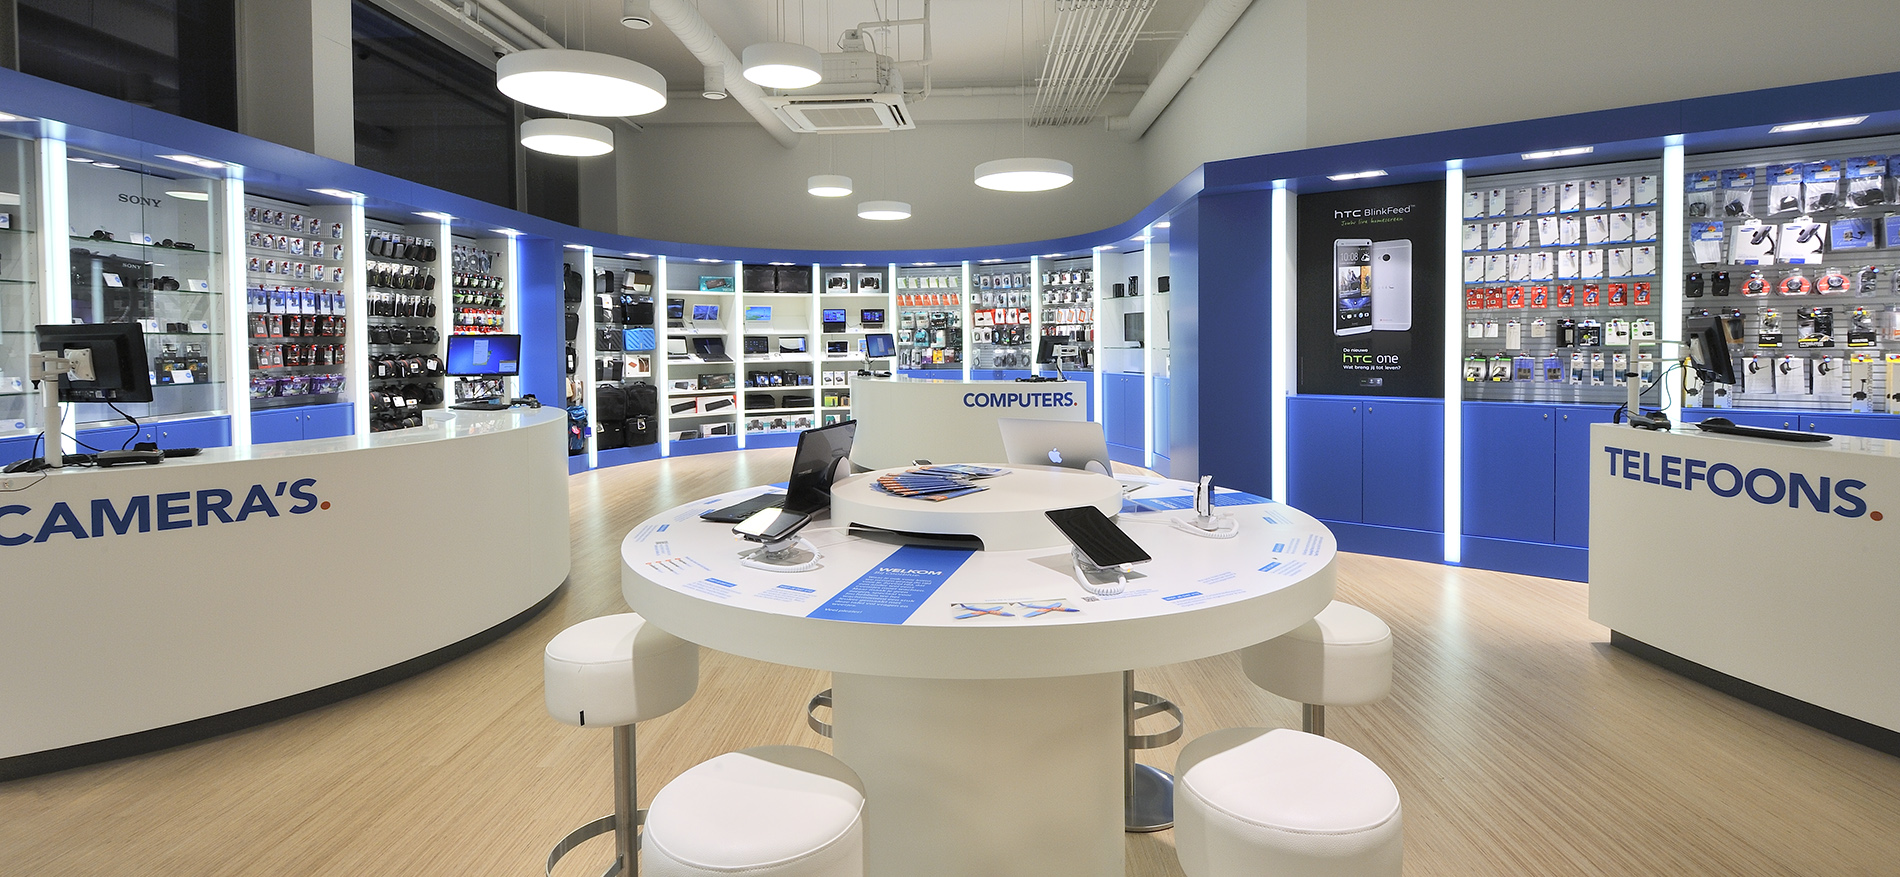 Interior Coolblue Electronics Rotterdam - Retail design